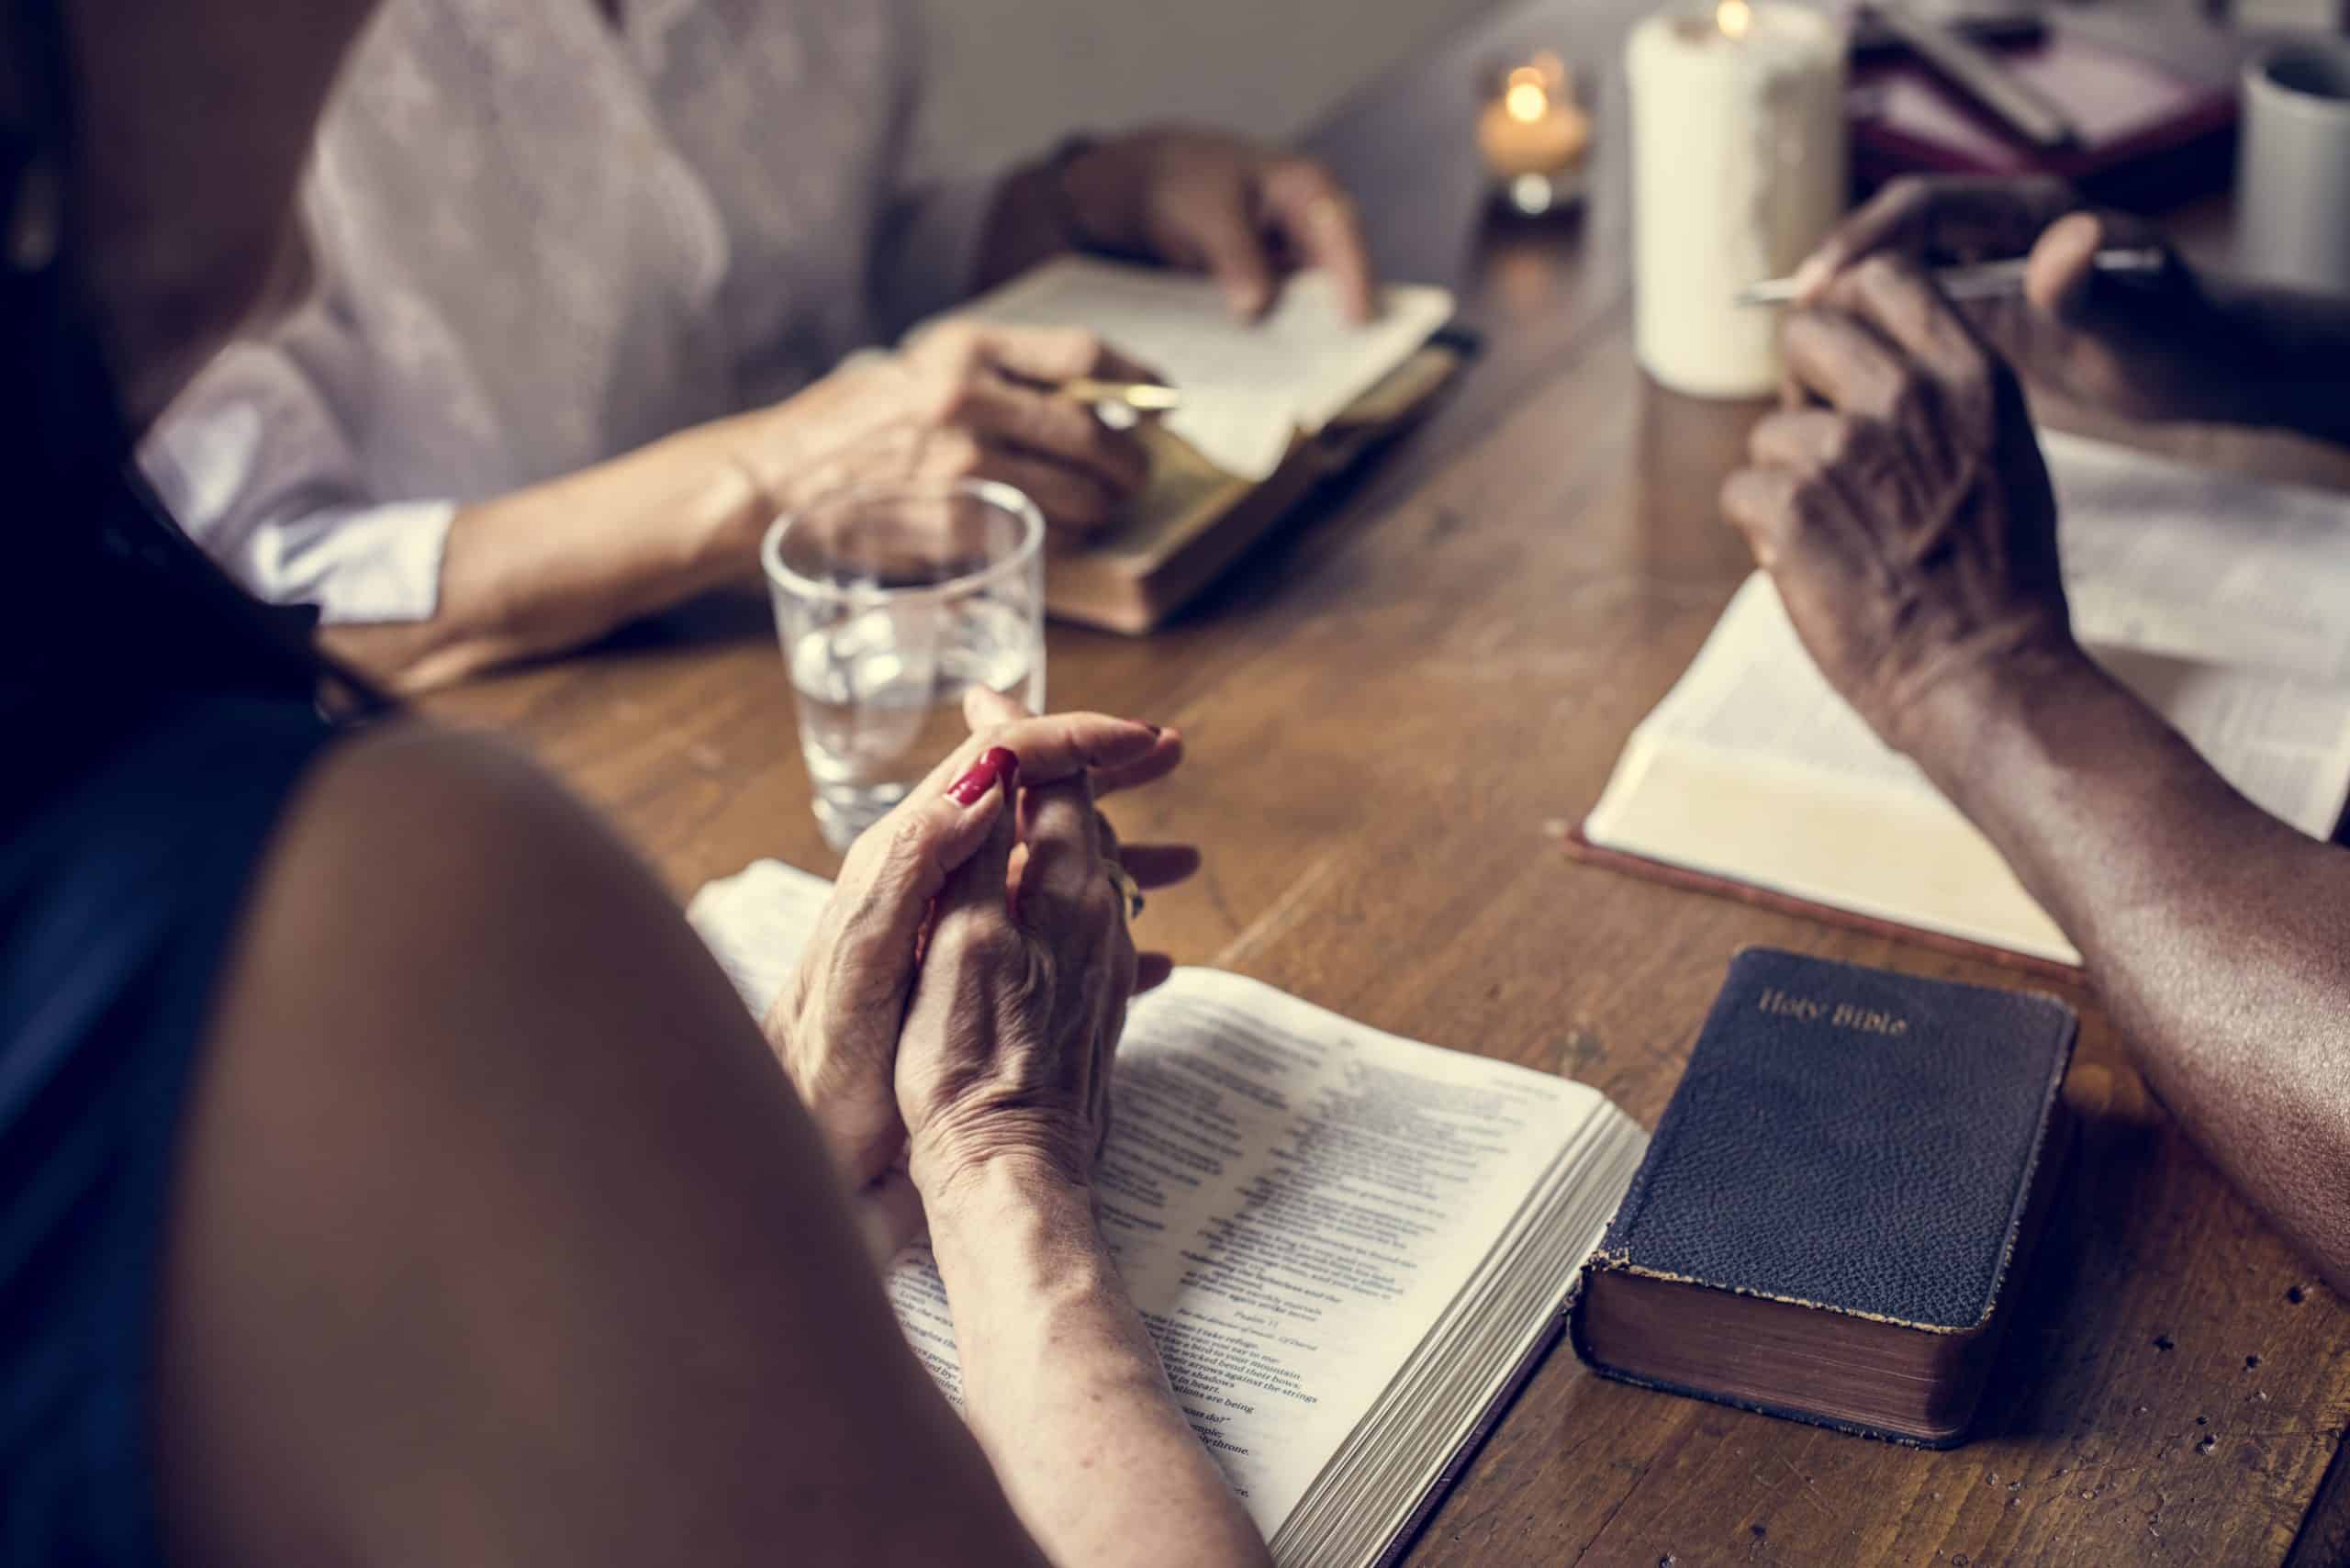 closing prayers for bible study